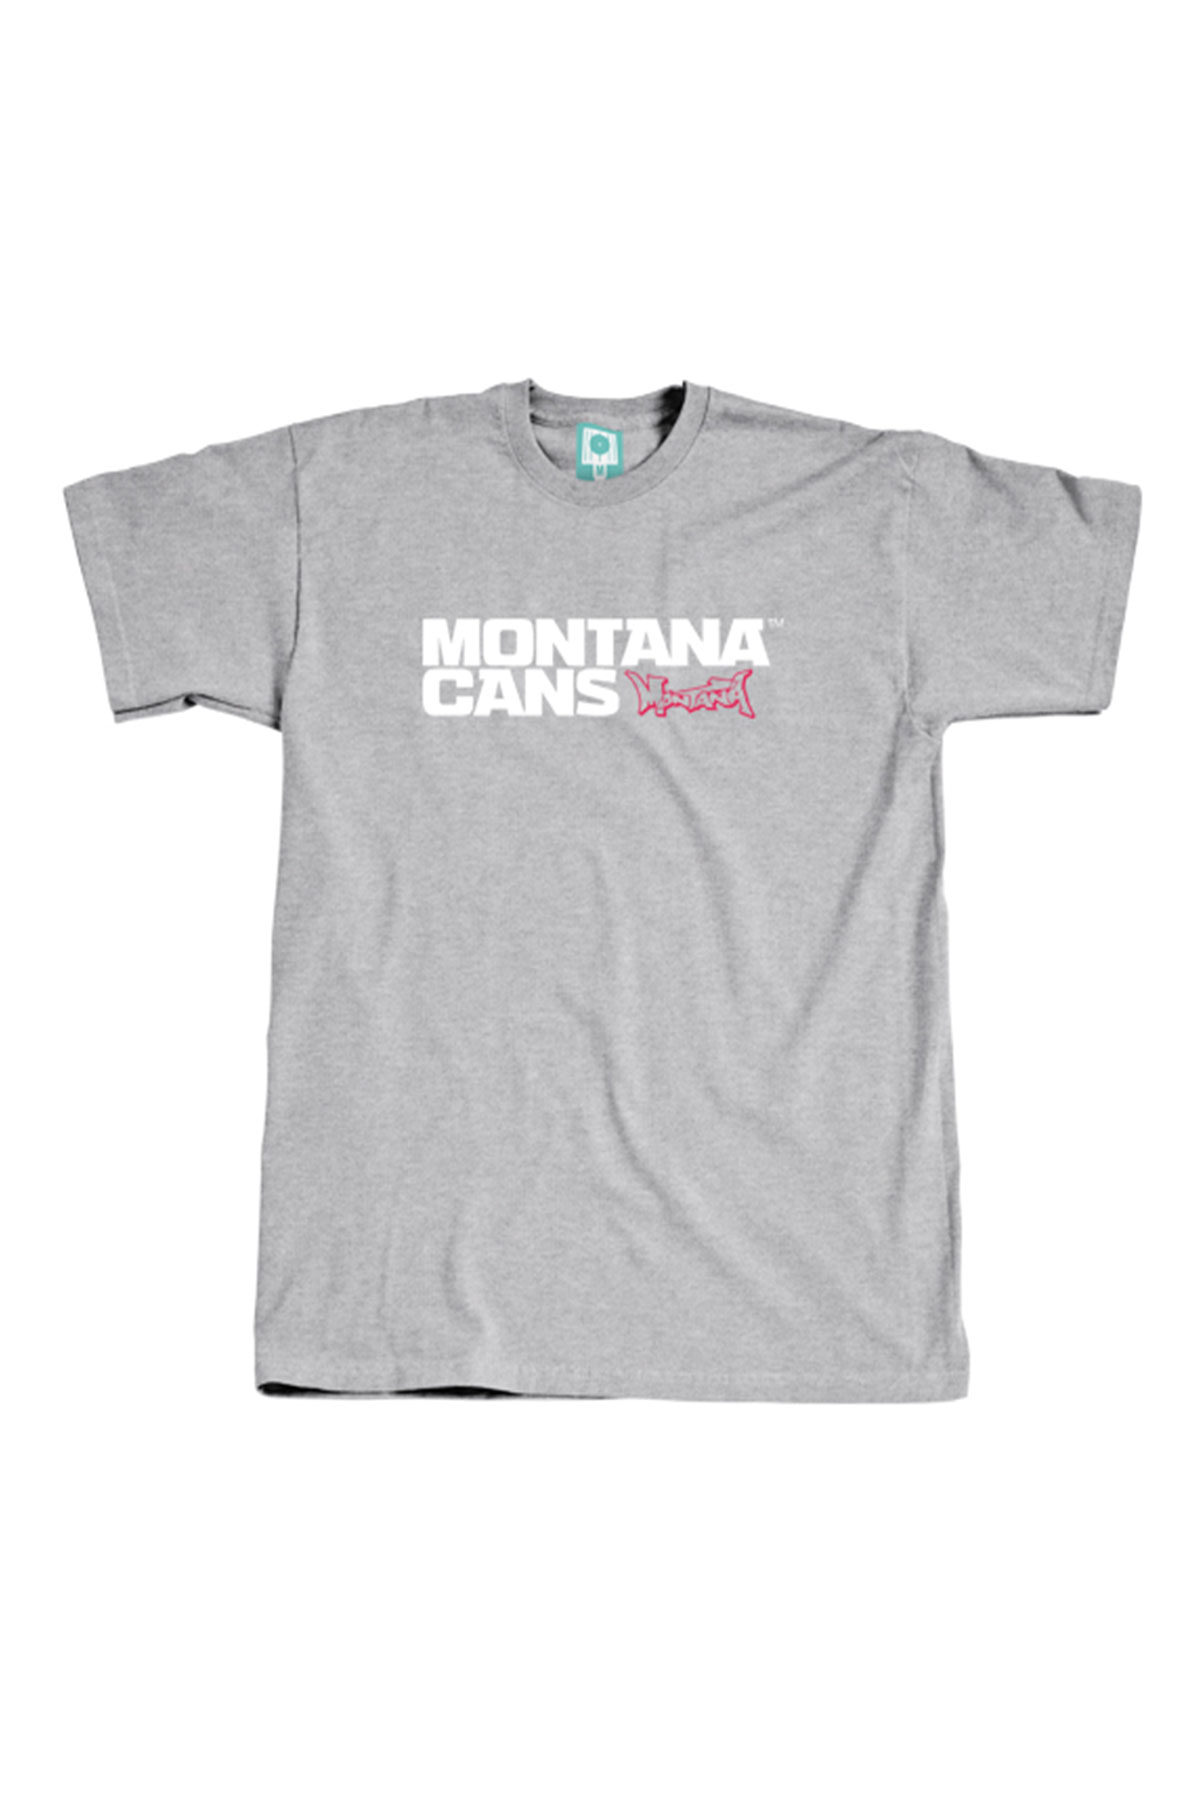 Montana TYPO+LOGO Grey T-Shirt